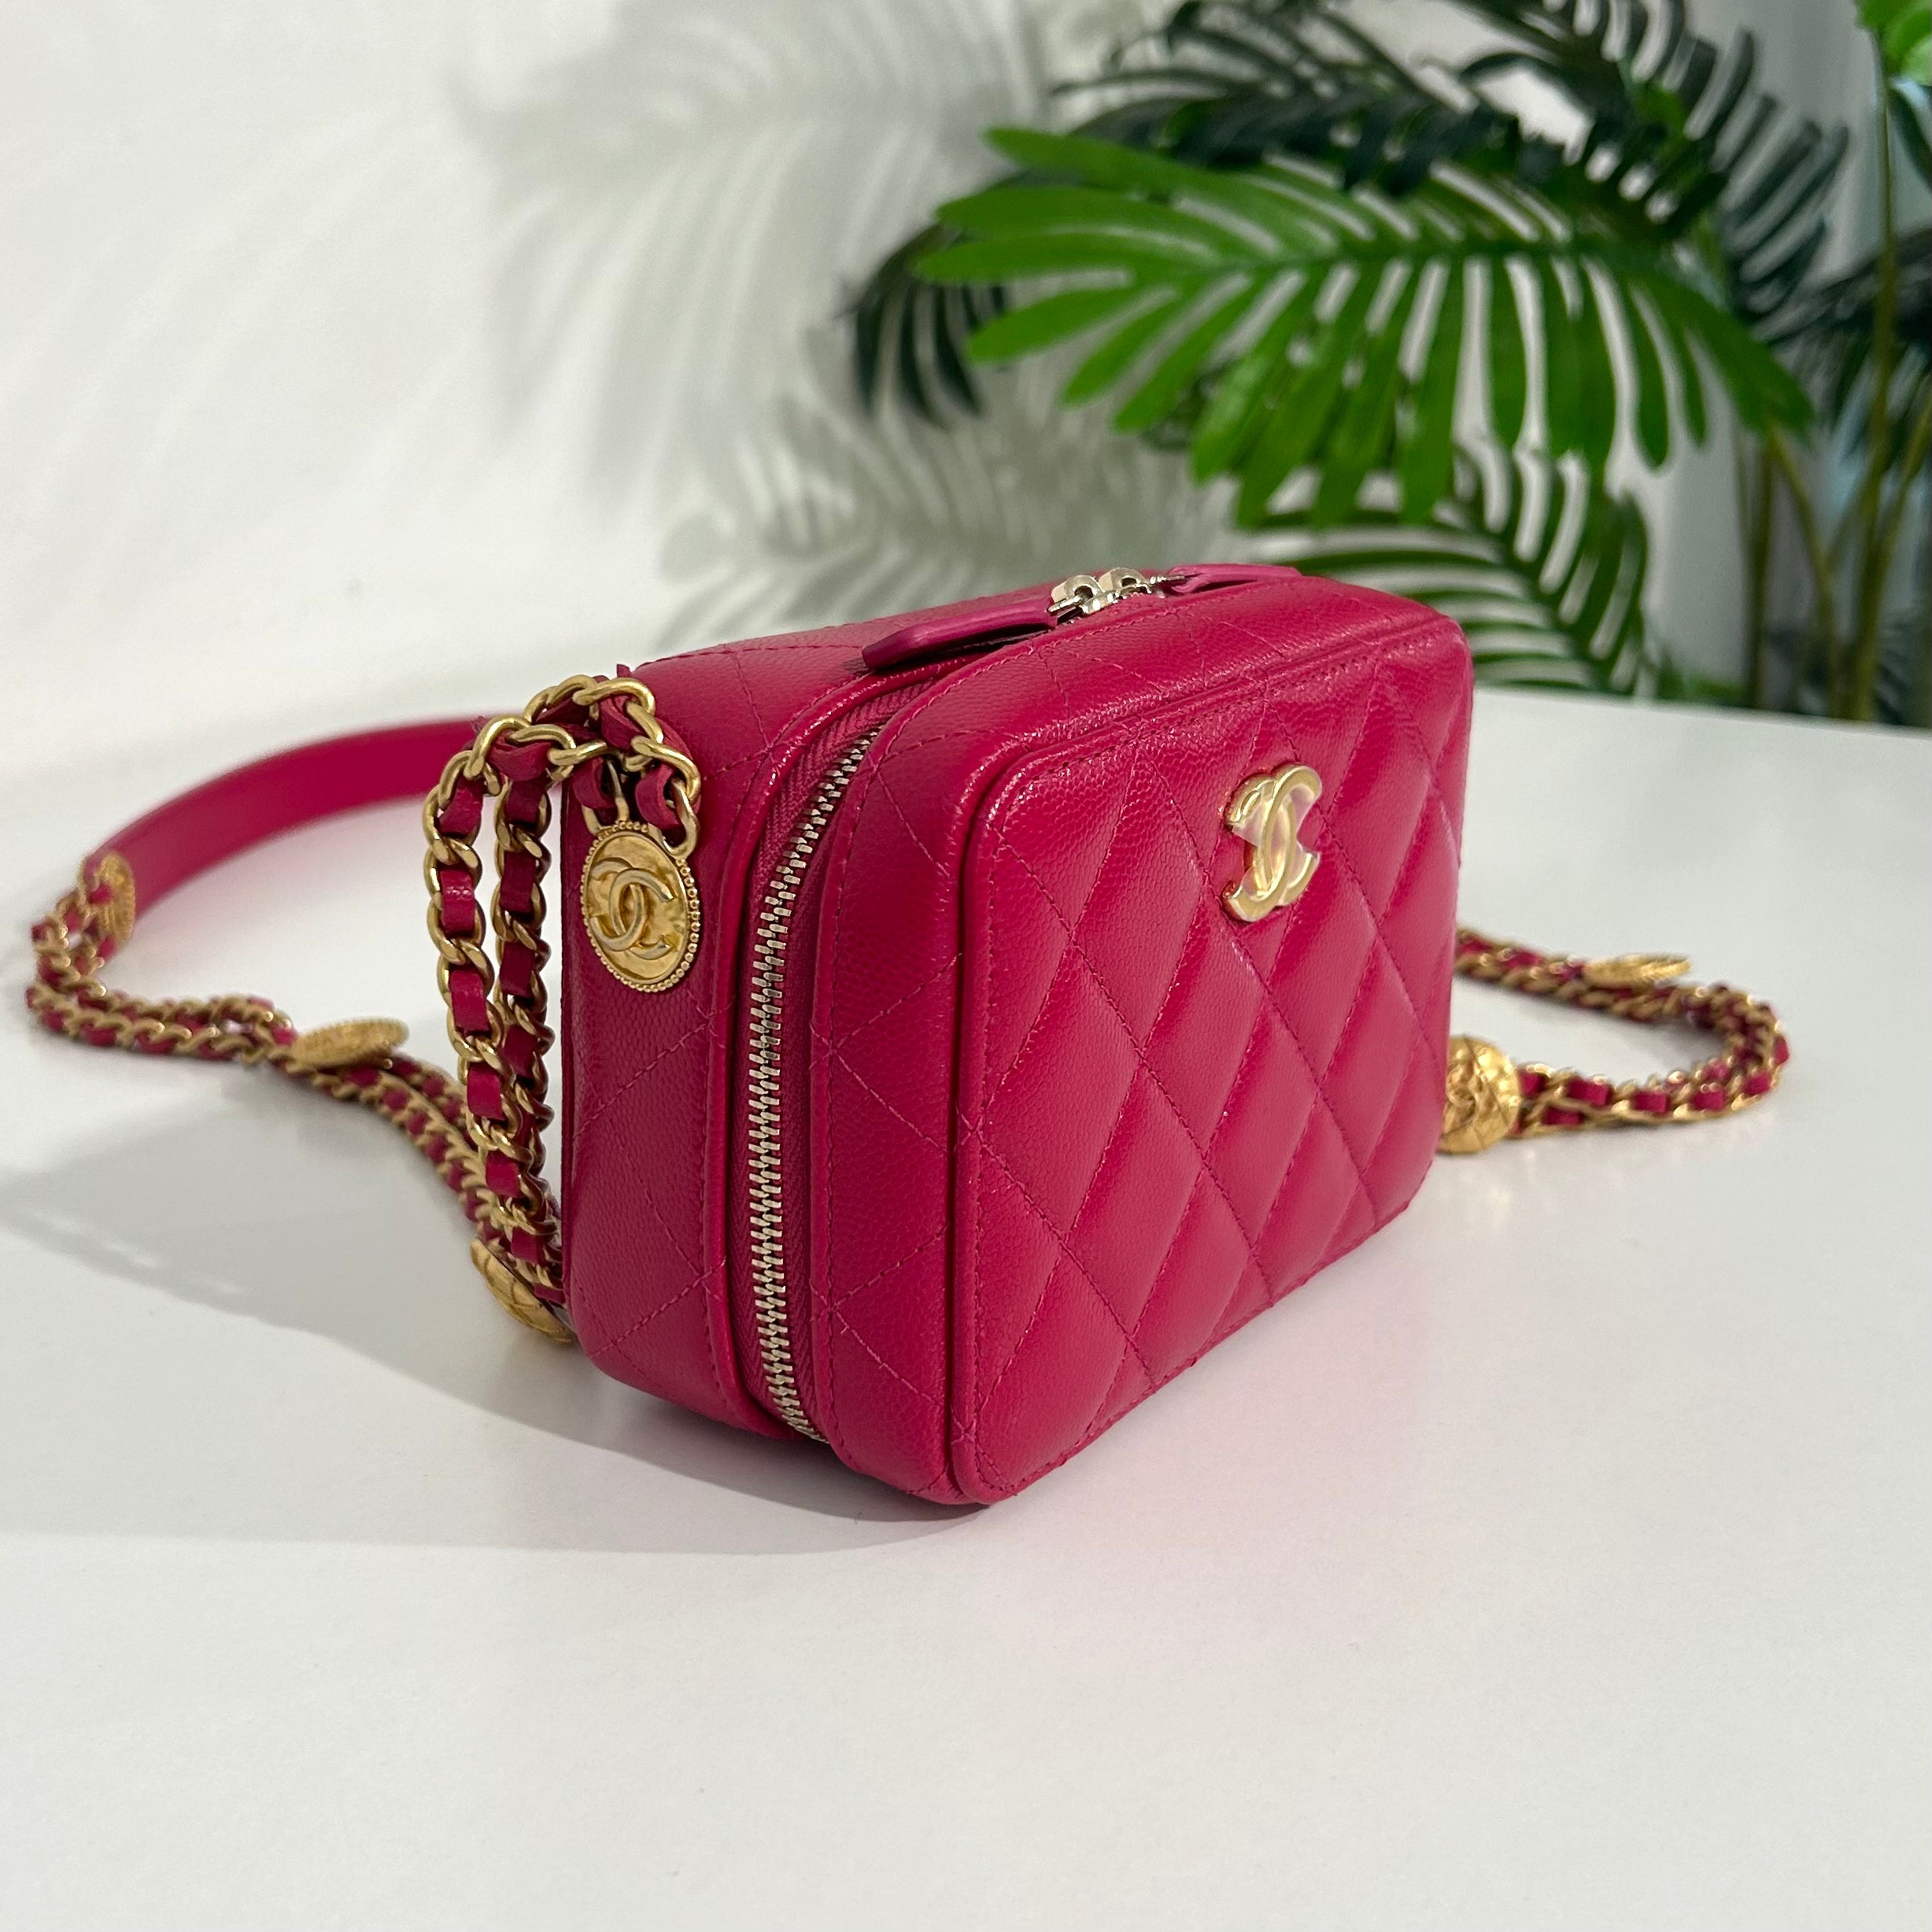 Pre-owned Chanel Pink Cc Matelasse Vanity Bag